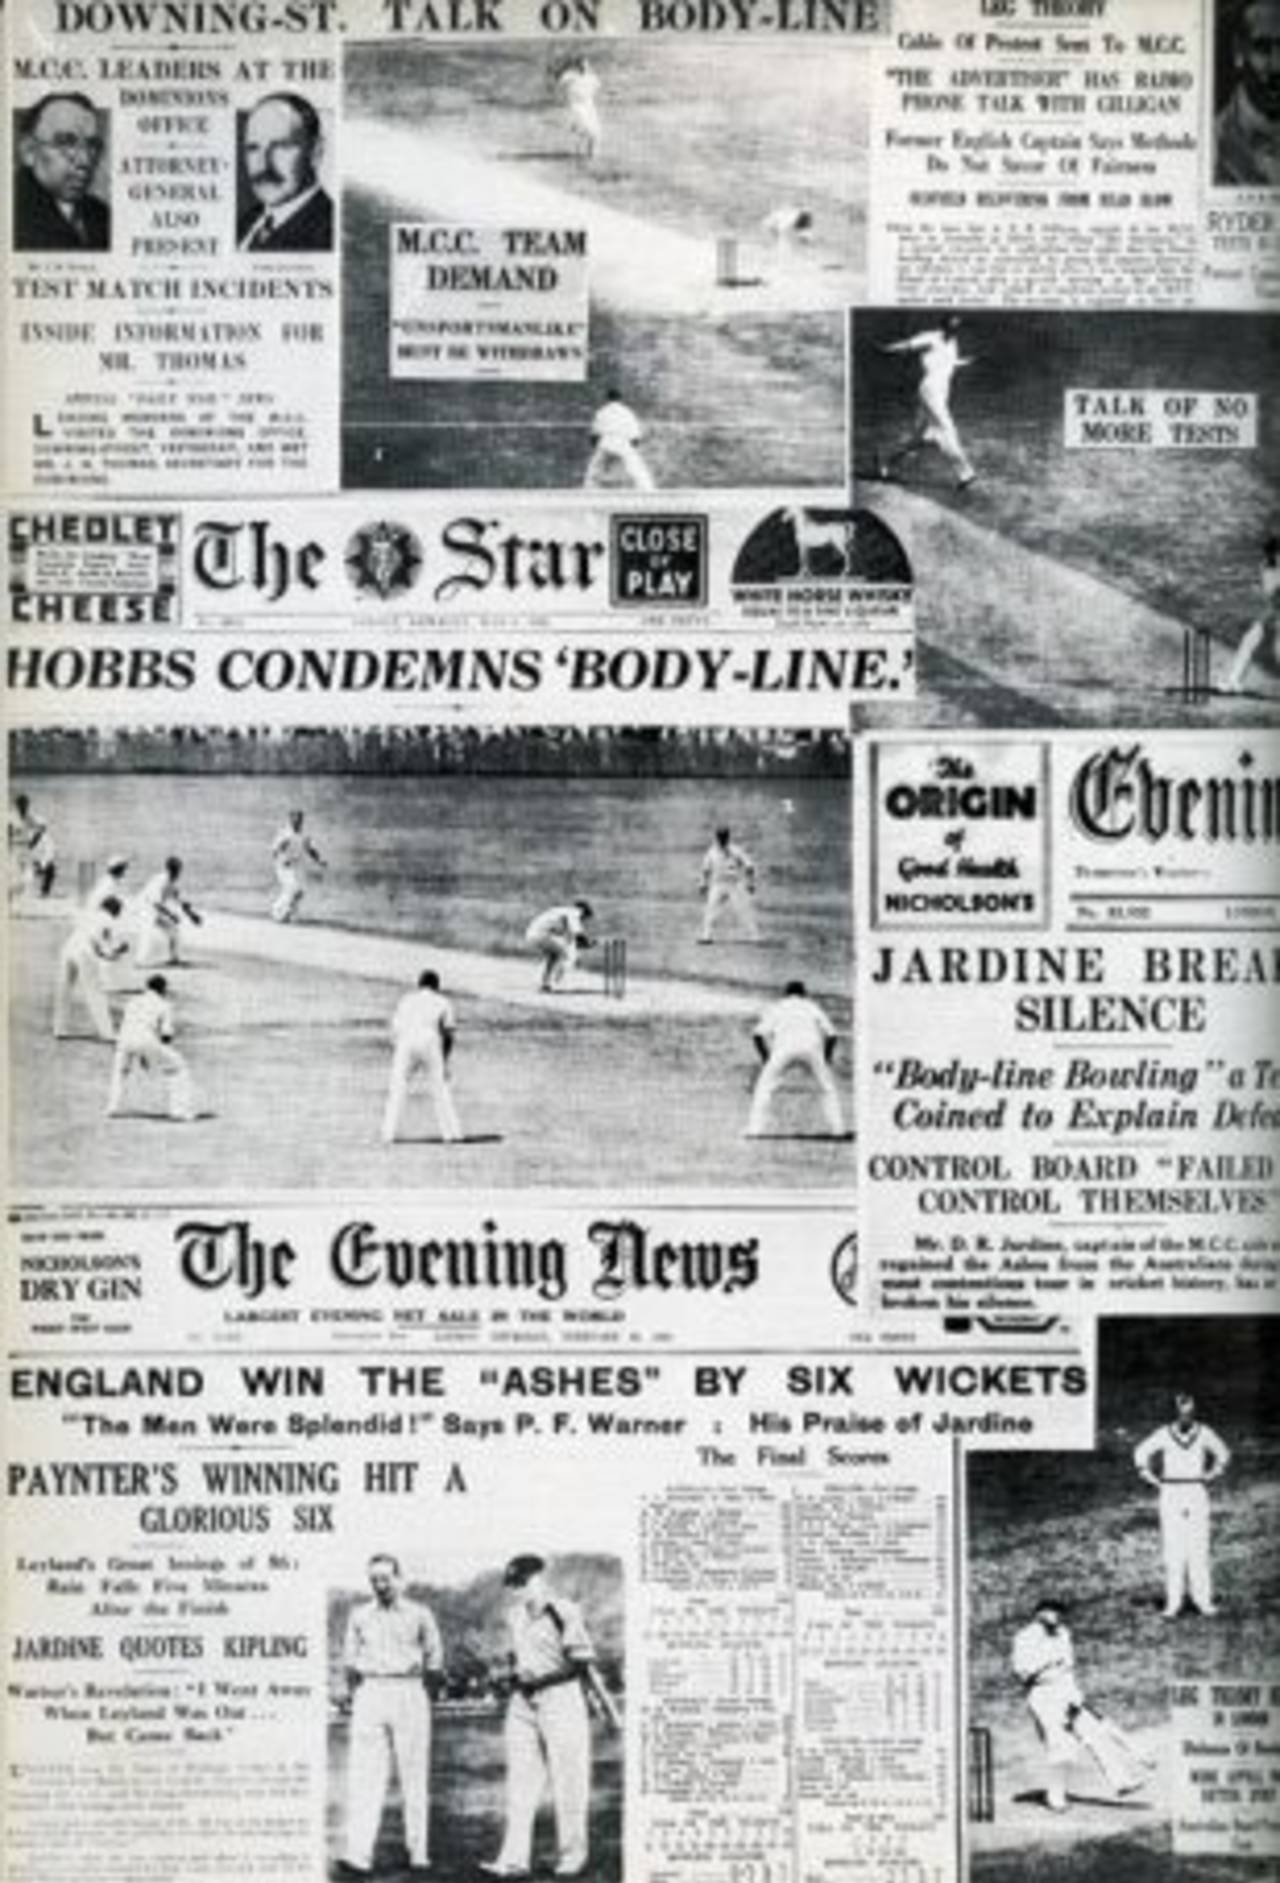 Newspaper coverage of Bodyline in 1933